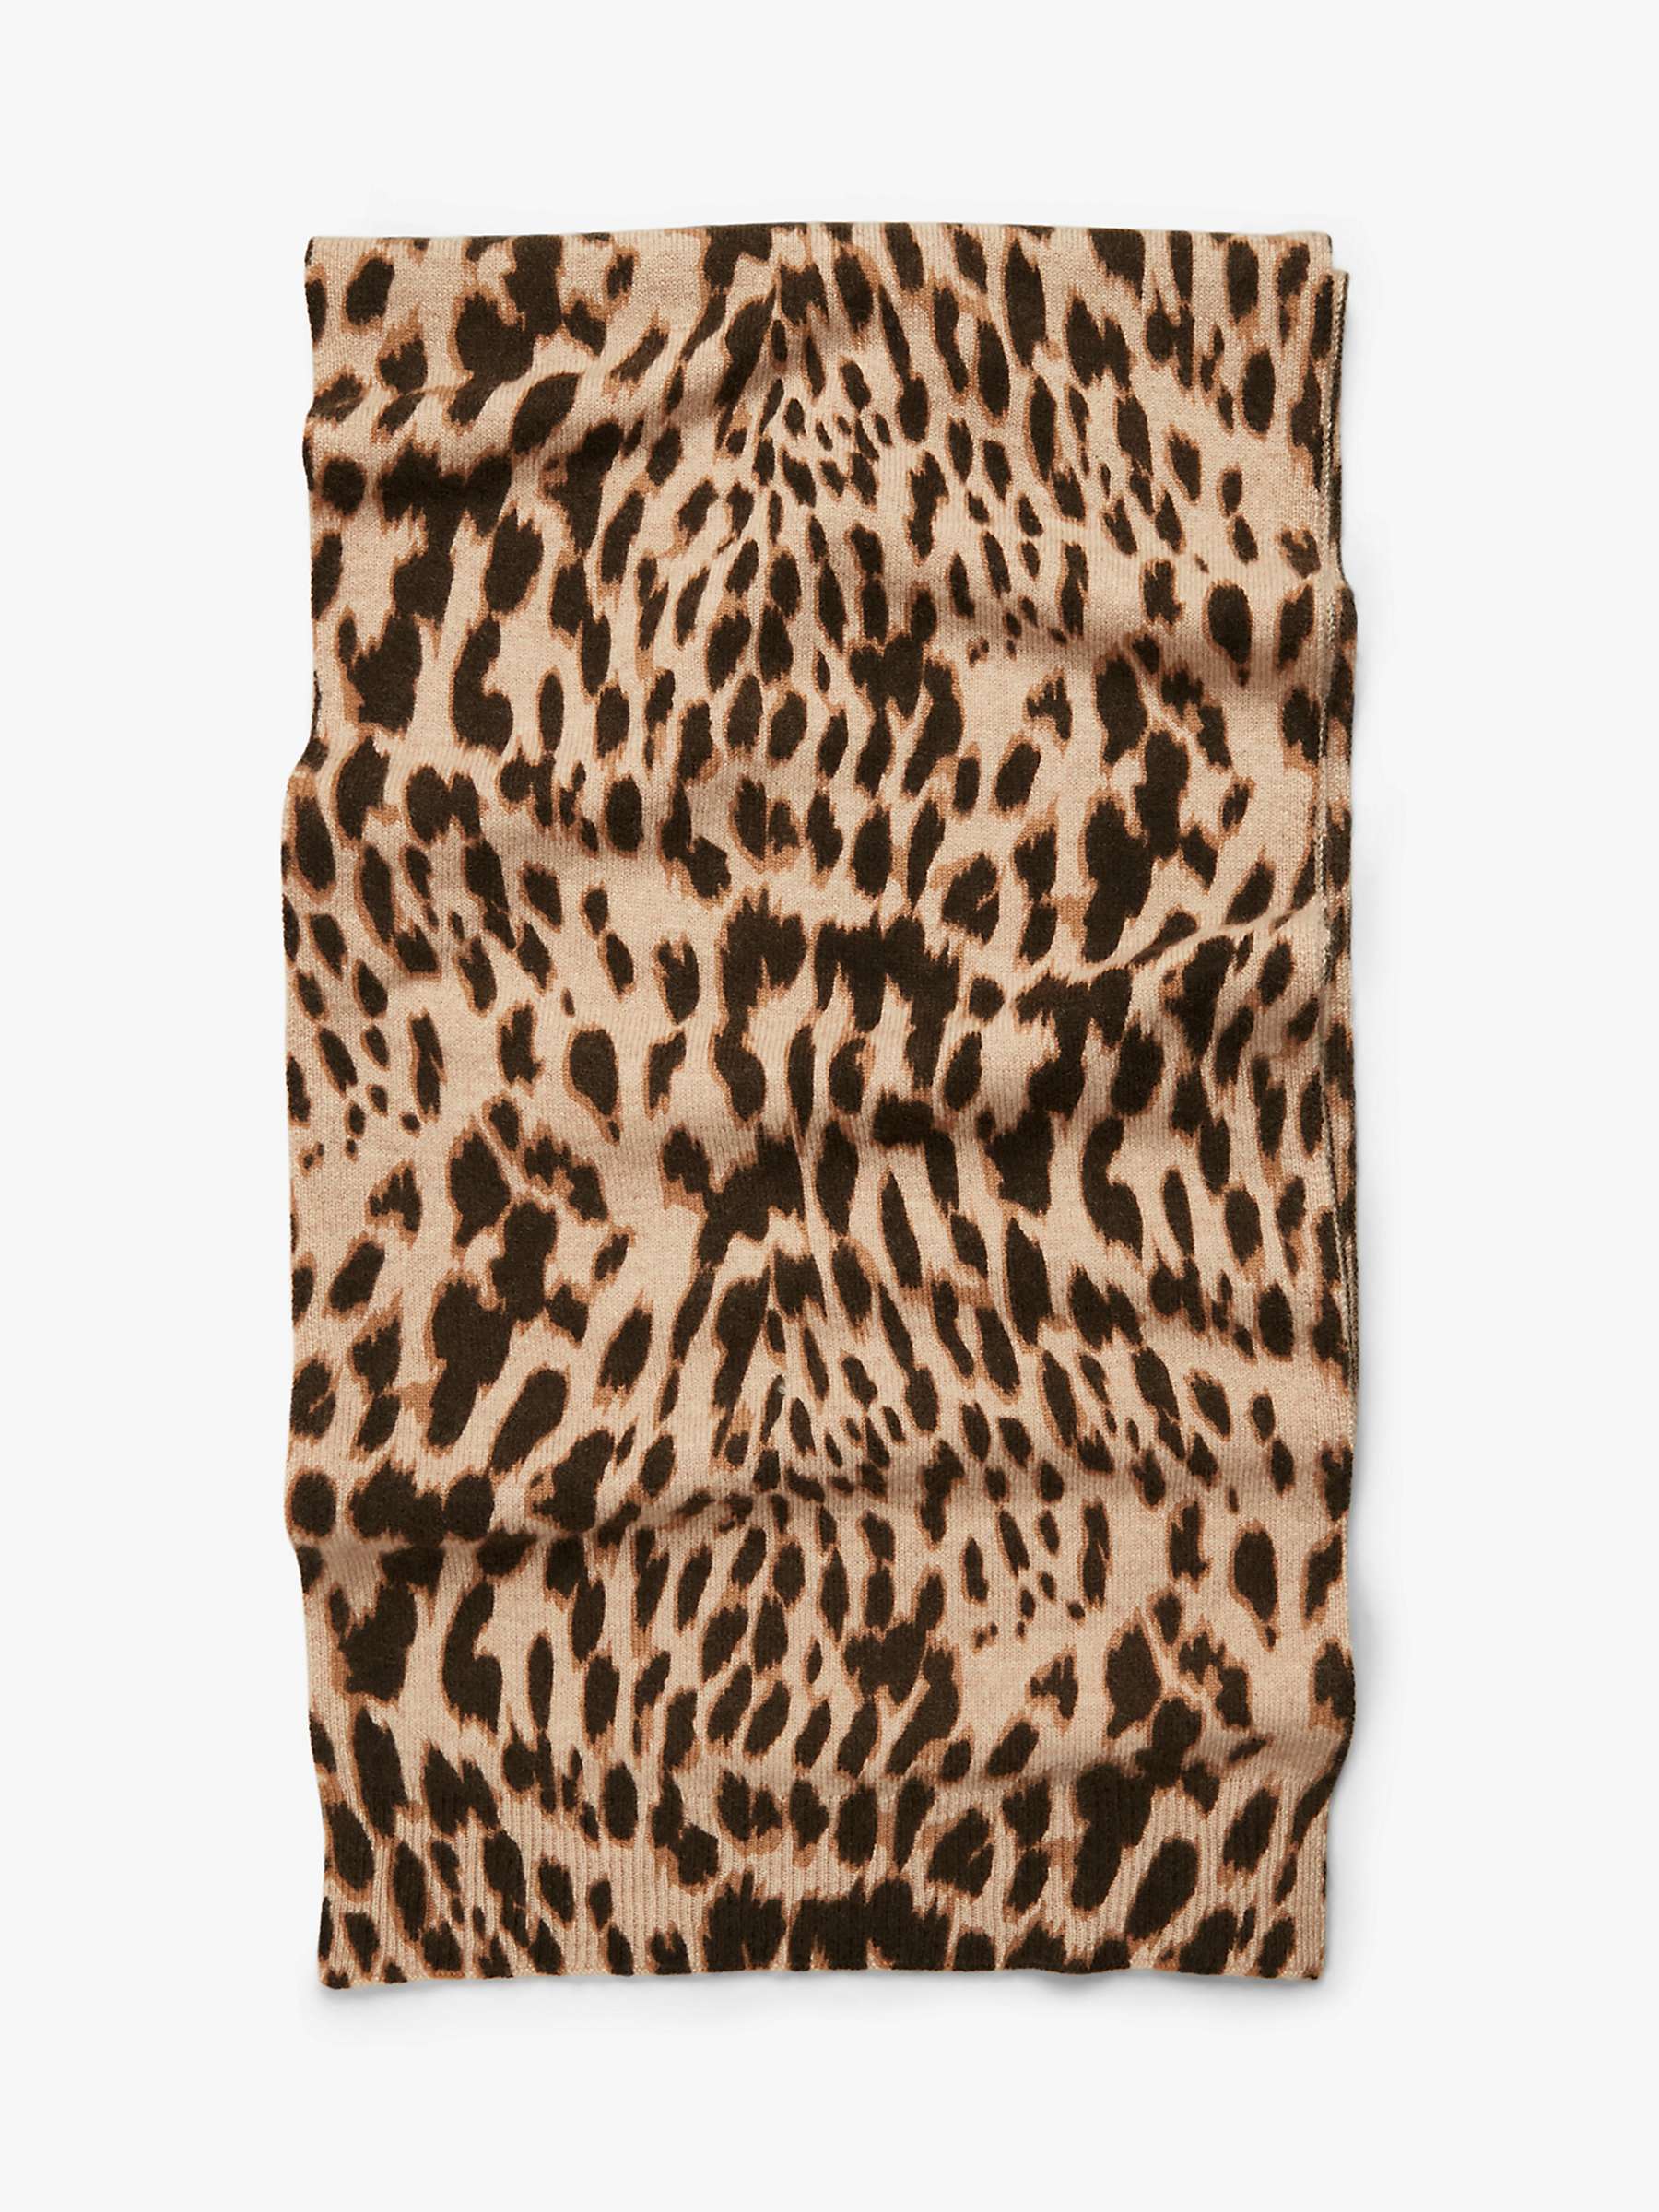 Buy HUSH Leopard Print Cashmere Scarf, Multi Online at johnlewis.com